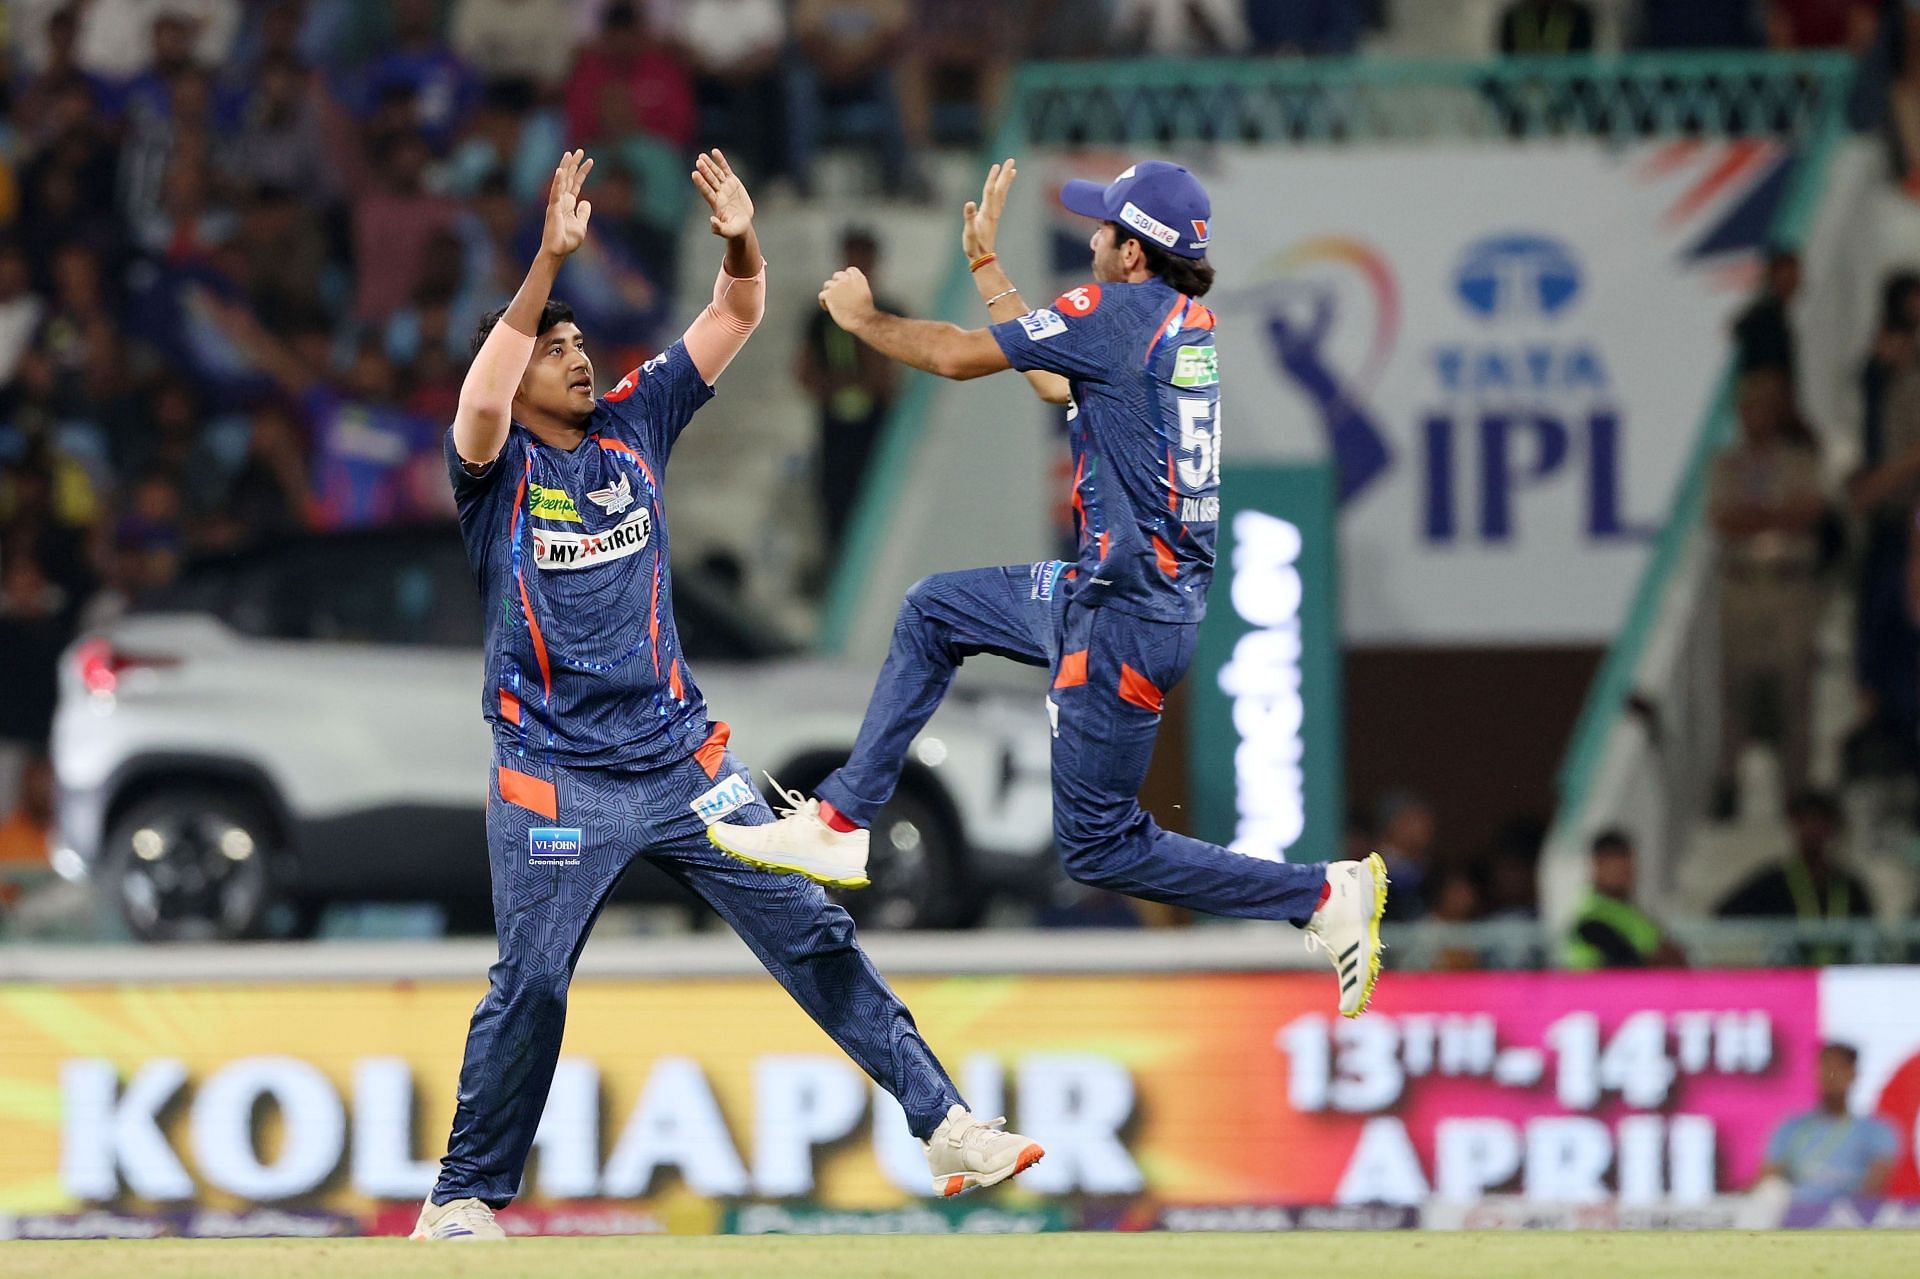 Yash Thakur celebrates a wicket. (Credits: Twitter)